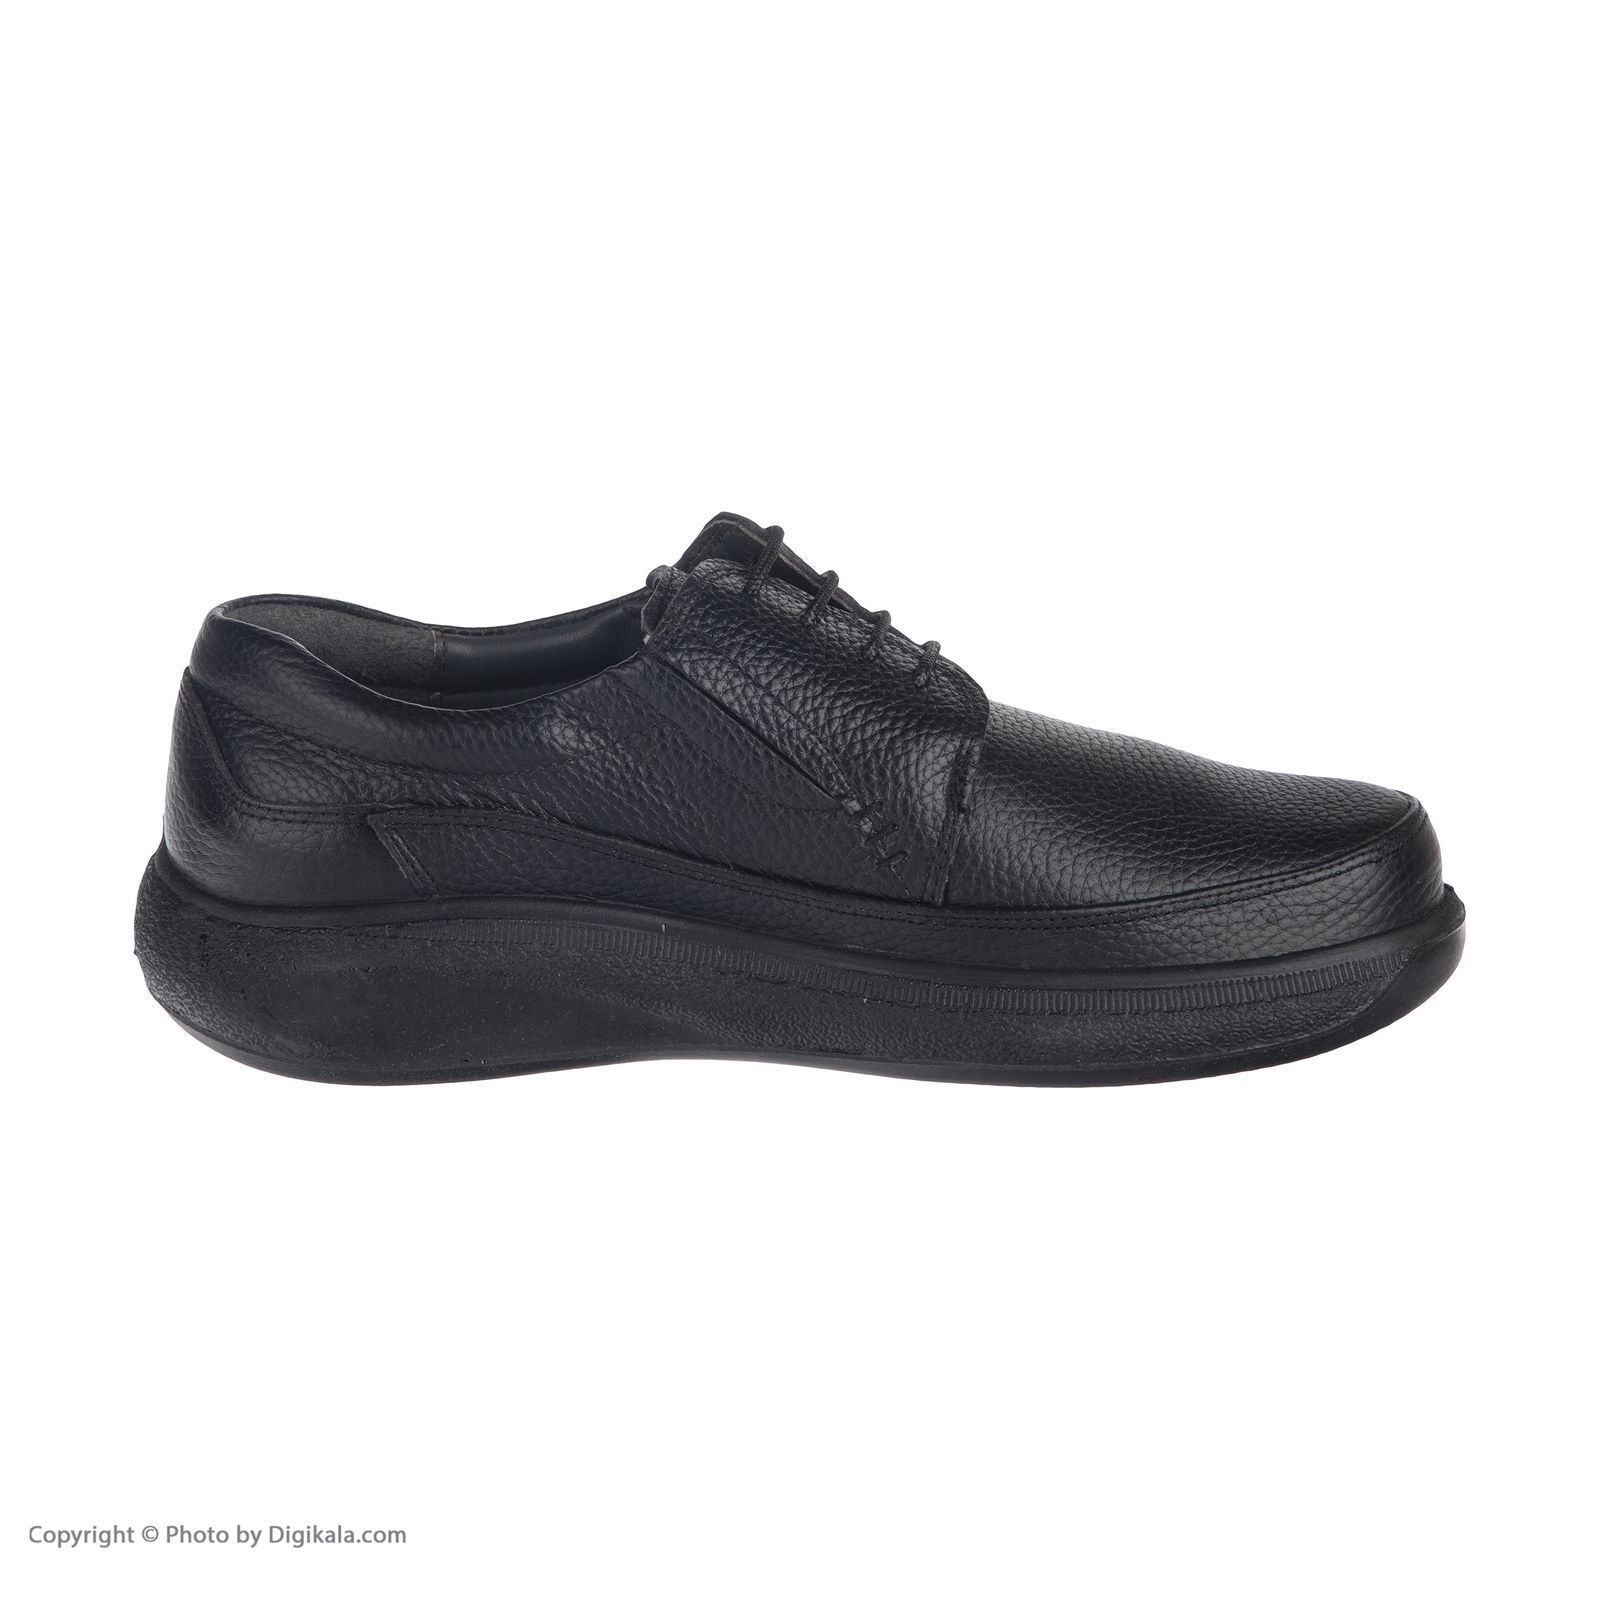  کفش روزمره مردانه واران مدل 7231a503101 -  - 6